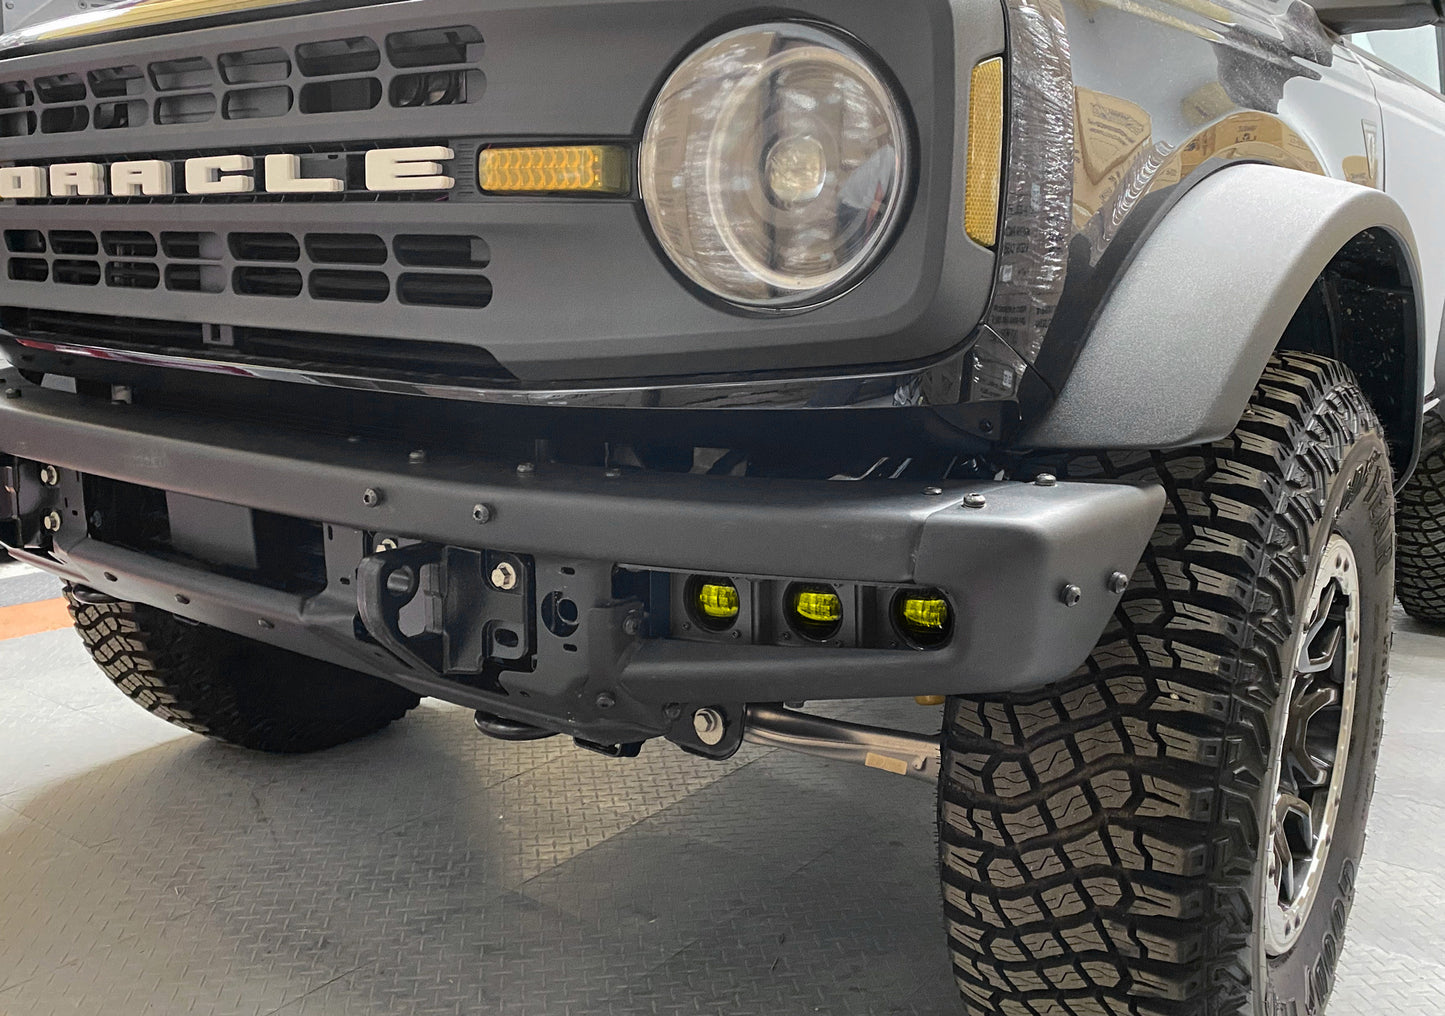 ORACLE Lighting 5890-006 Fits 2021-2023 Ford Bronco Triple LED Fog Light Kit for Steel Bumper